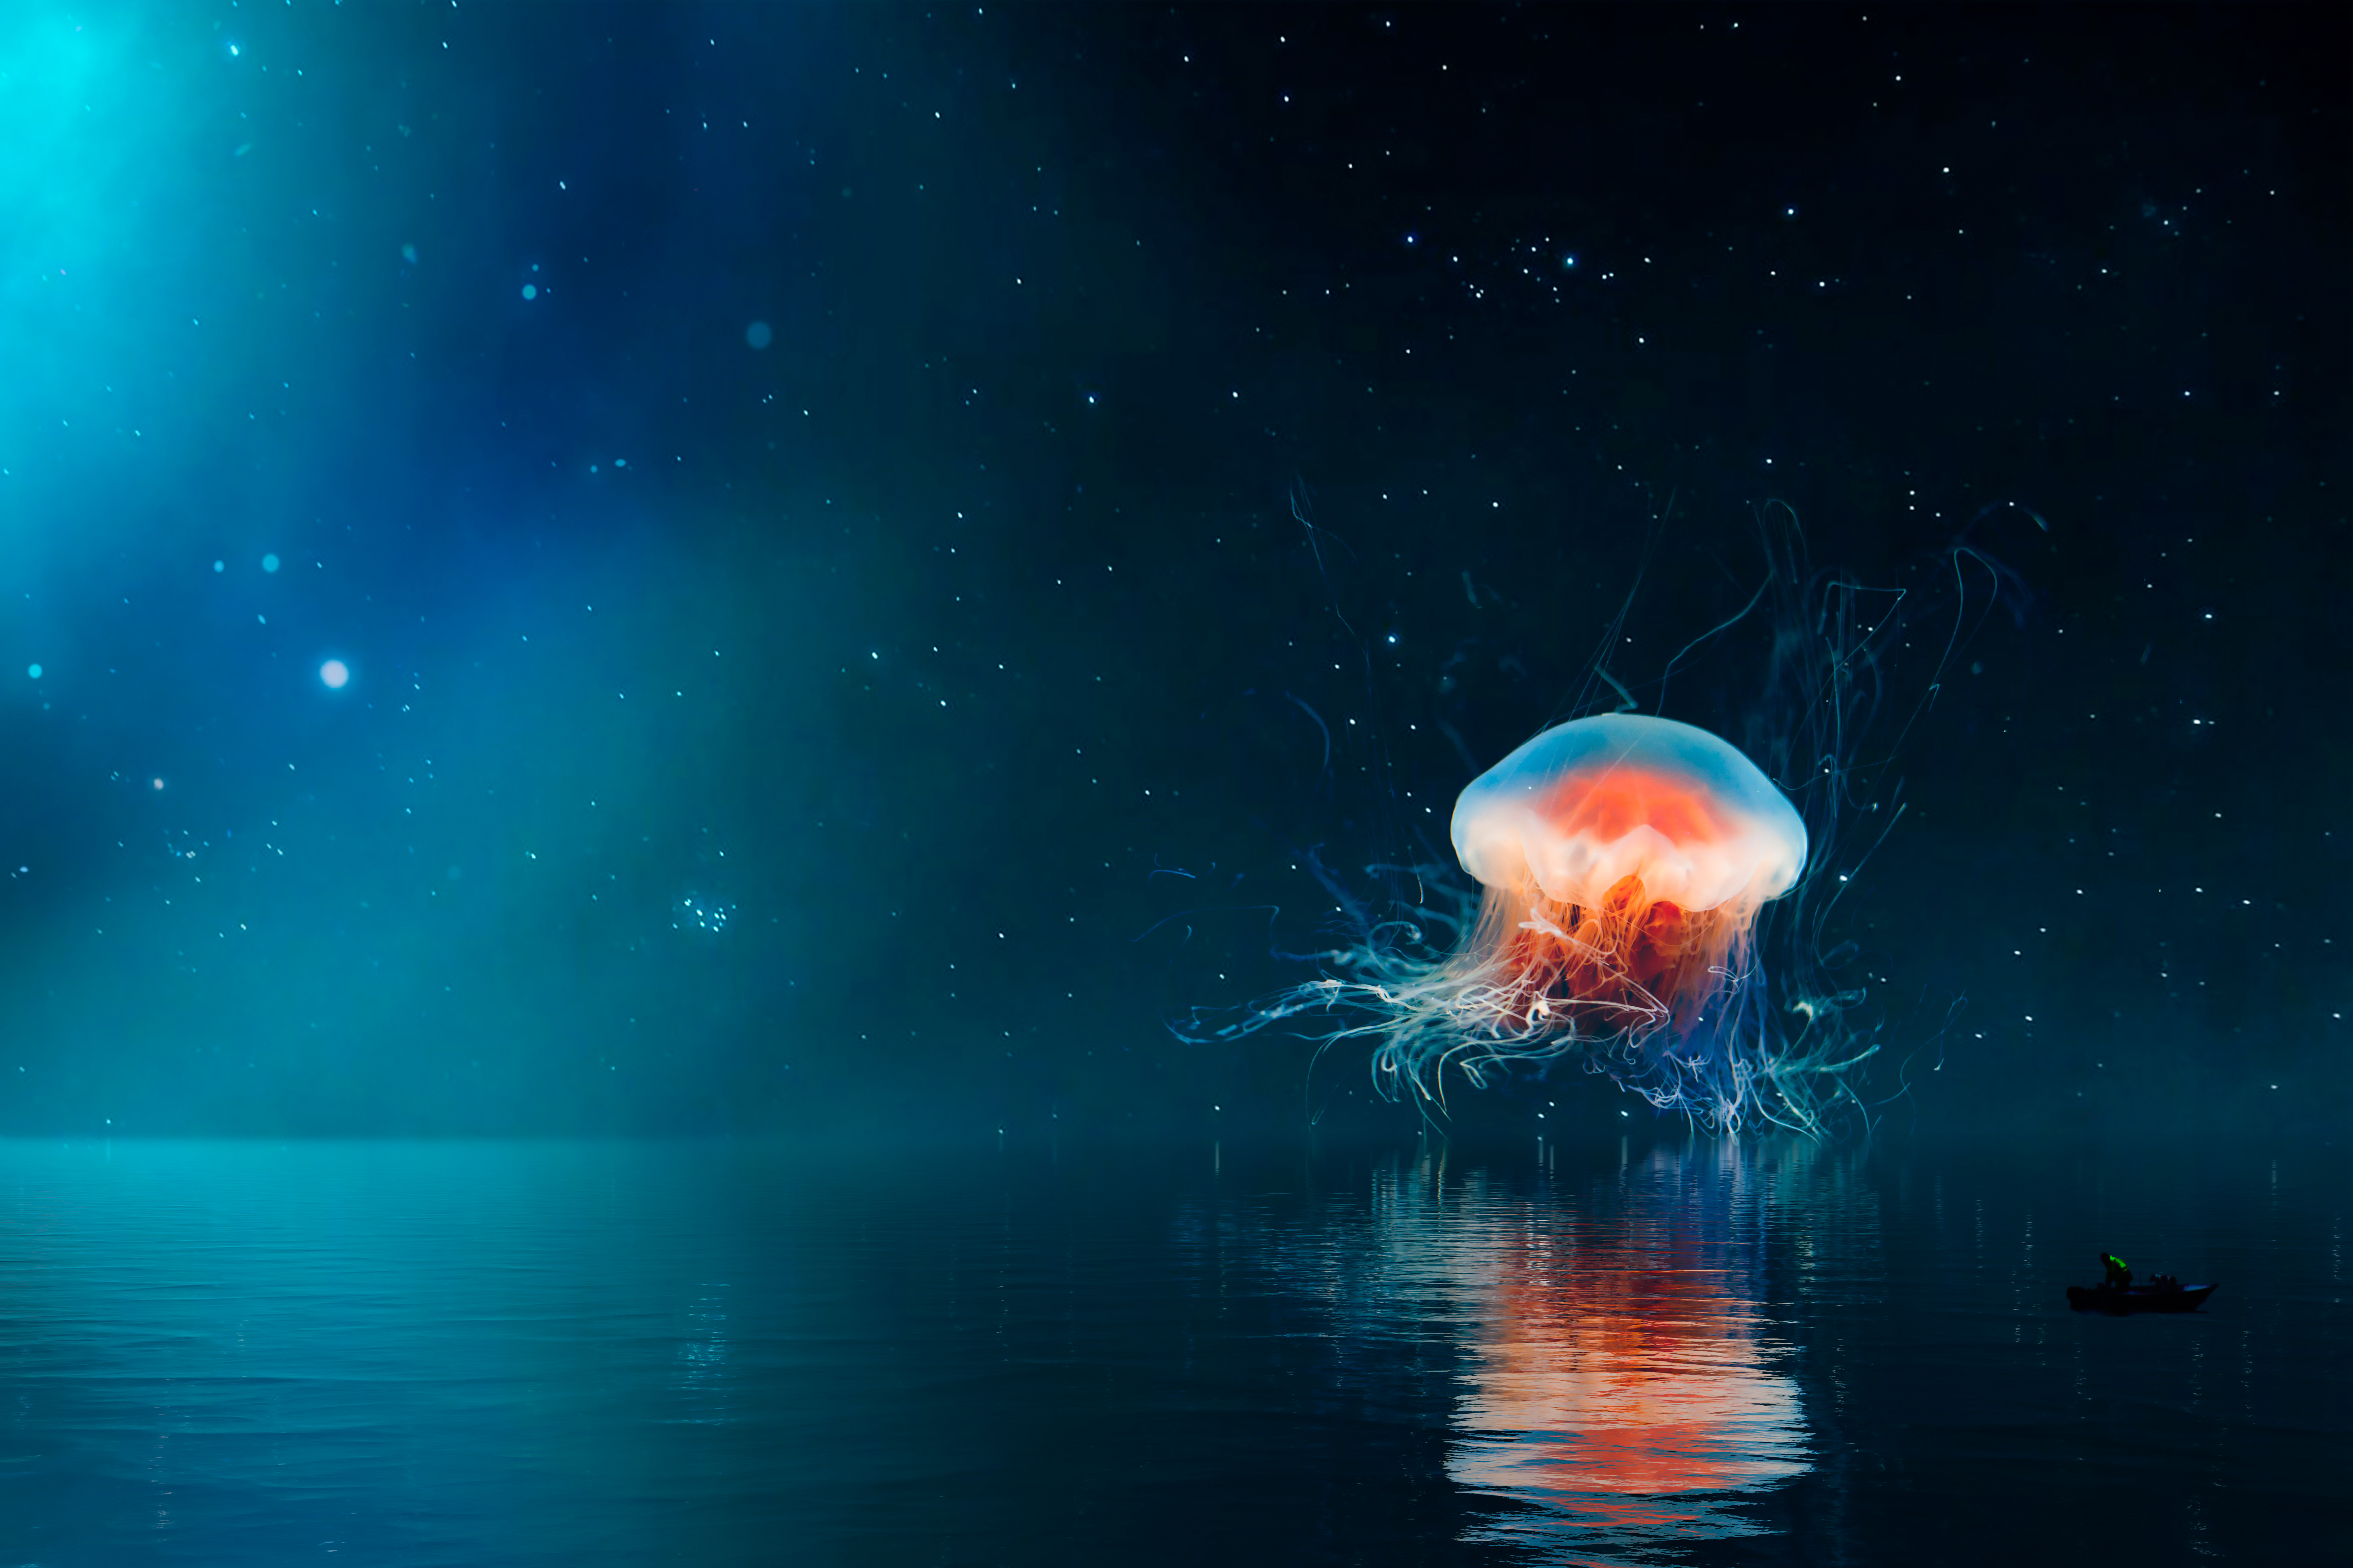 Wallpaper ID: 247675 / jellyfish bioluminescence underwater and water hd, 4k  Phone Wallpaper